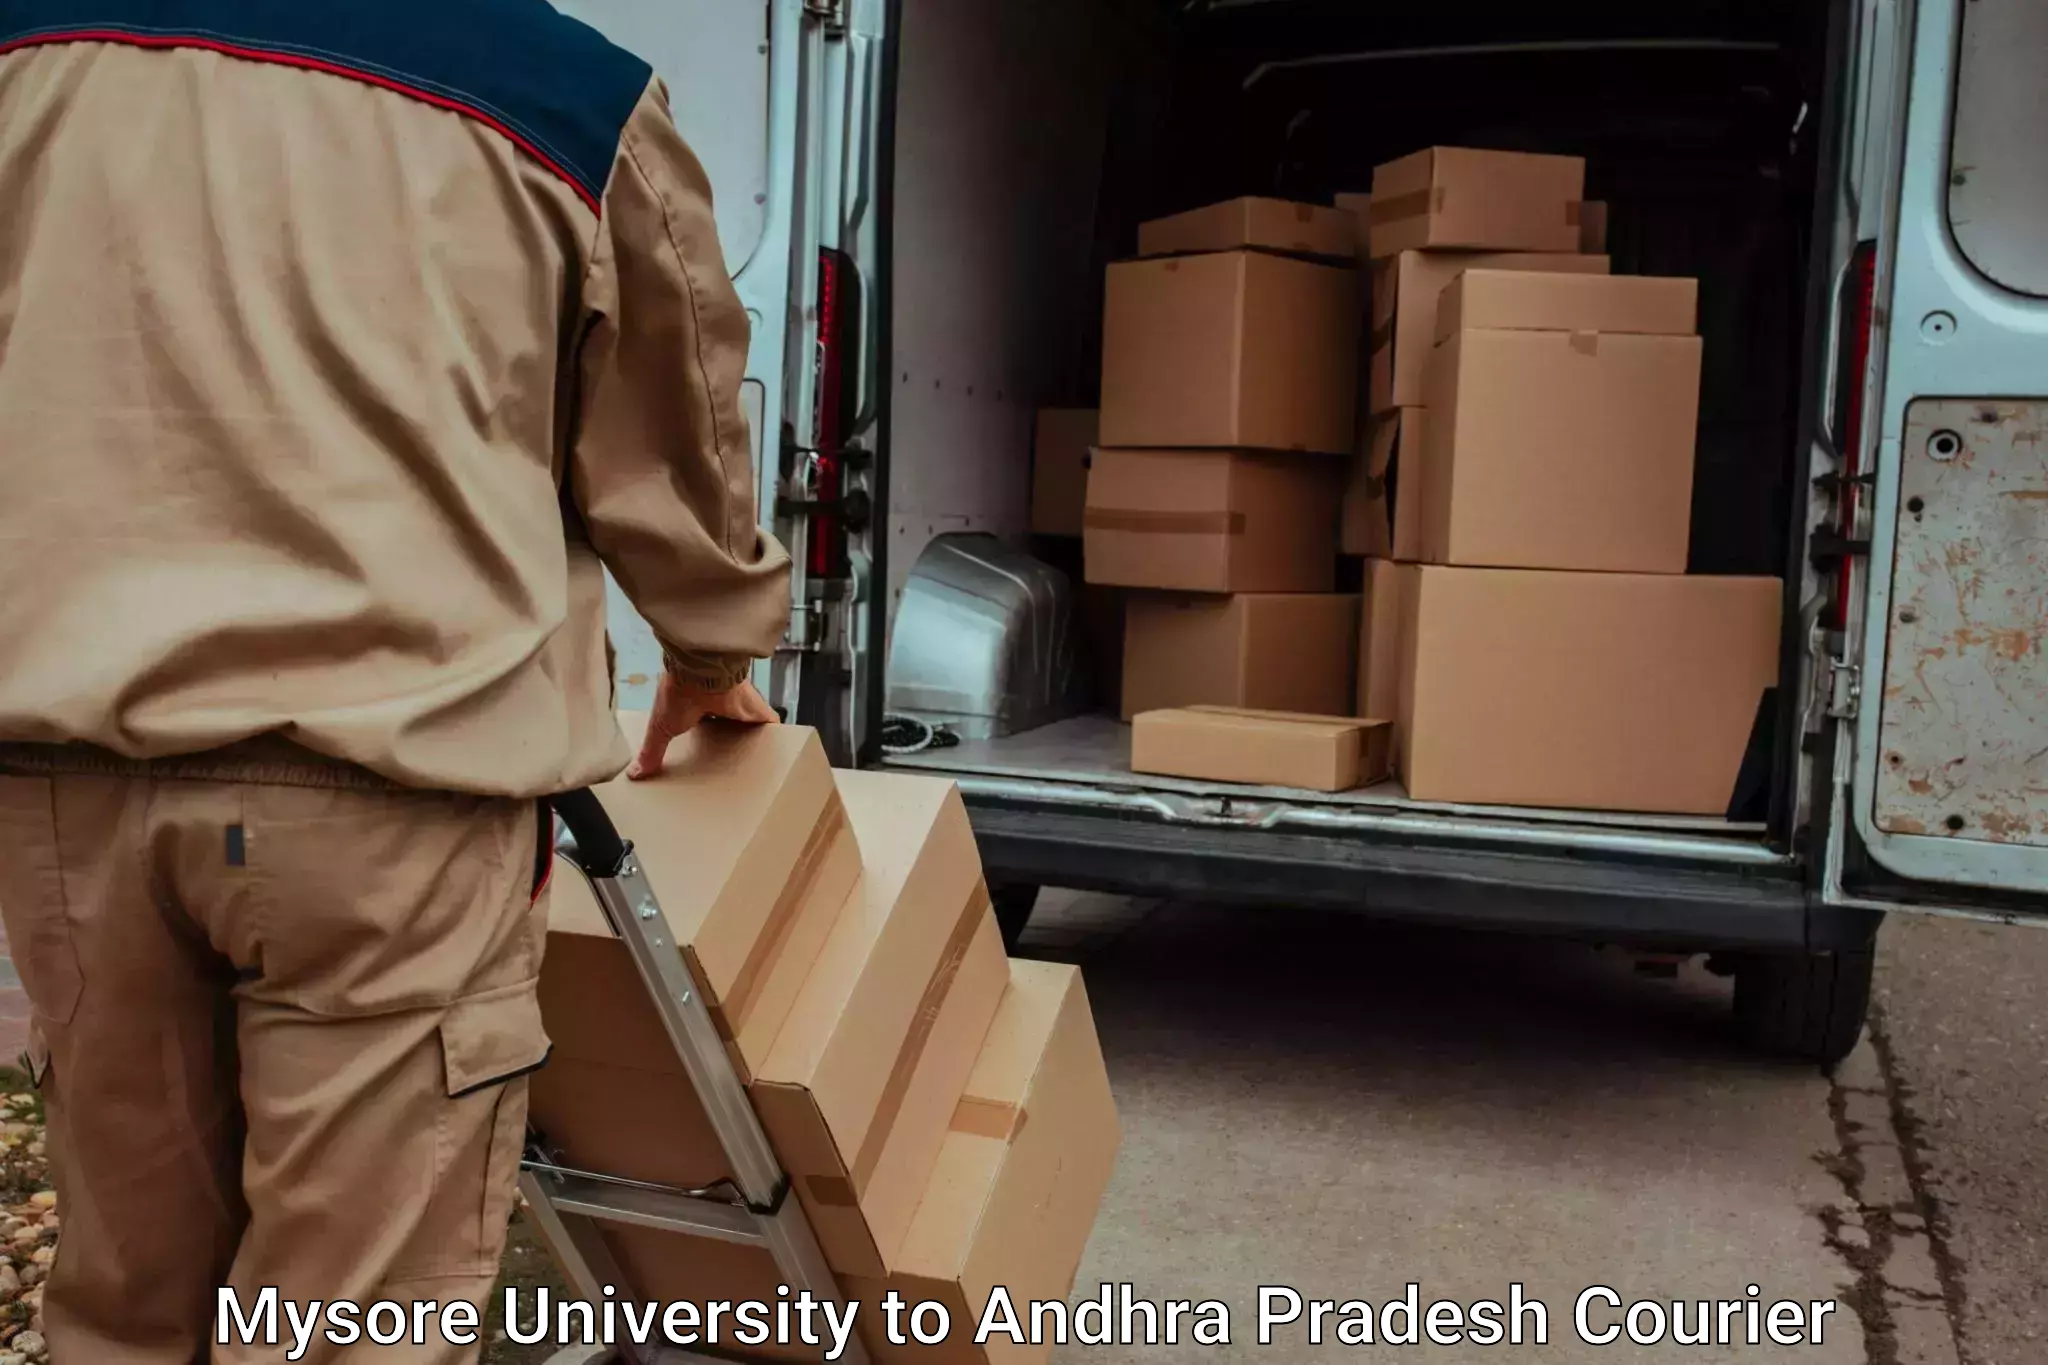 High-quality baggage shipment in Mysore University to Udayagiri